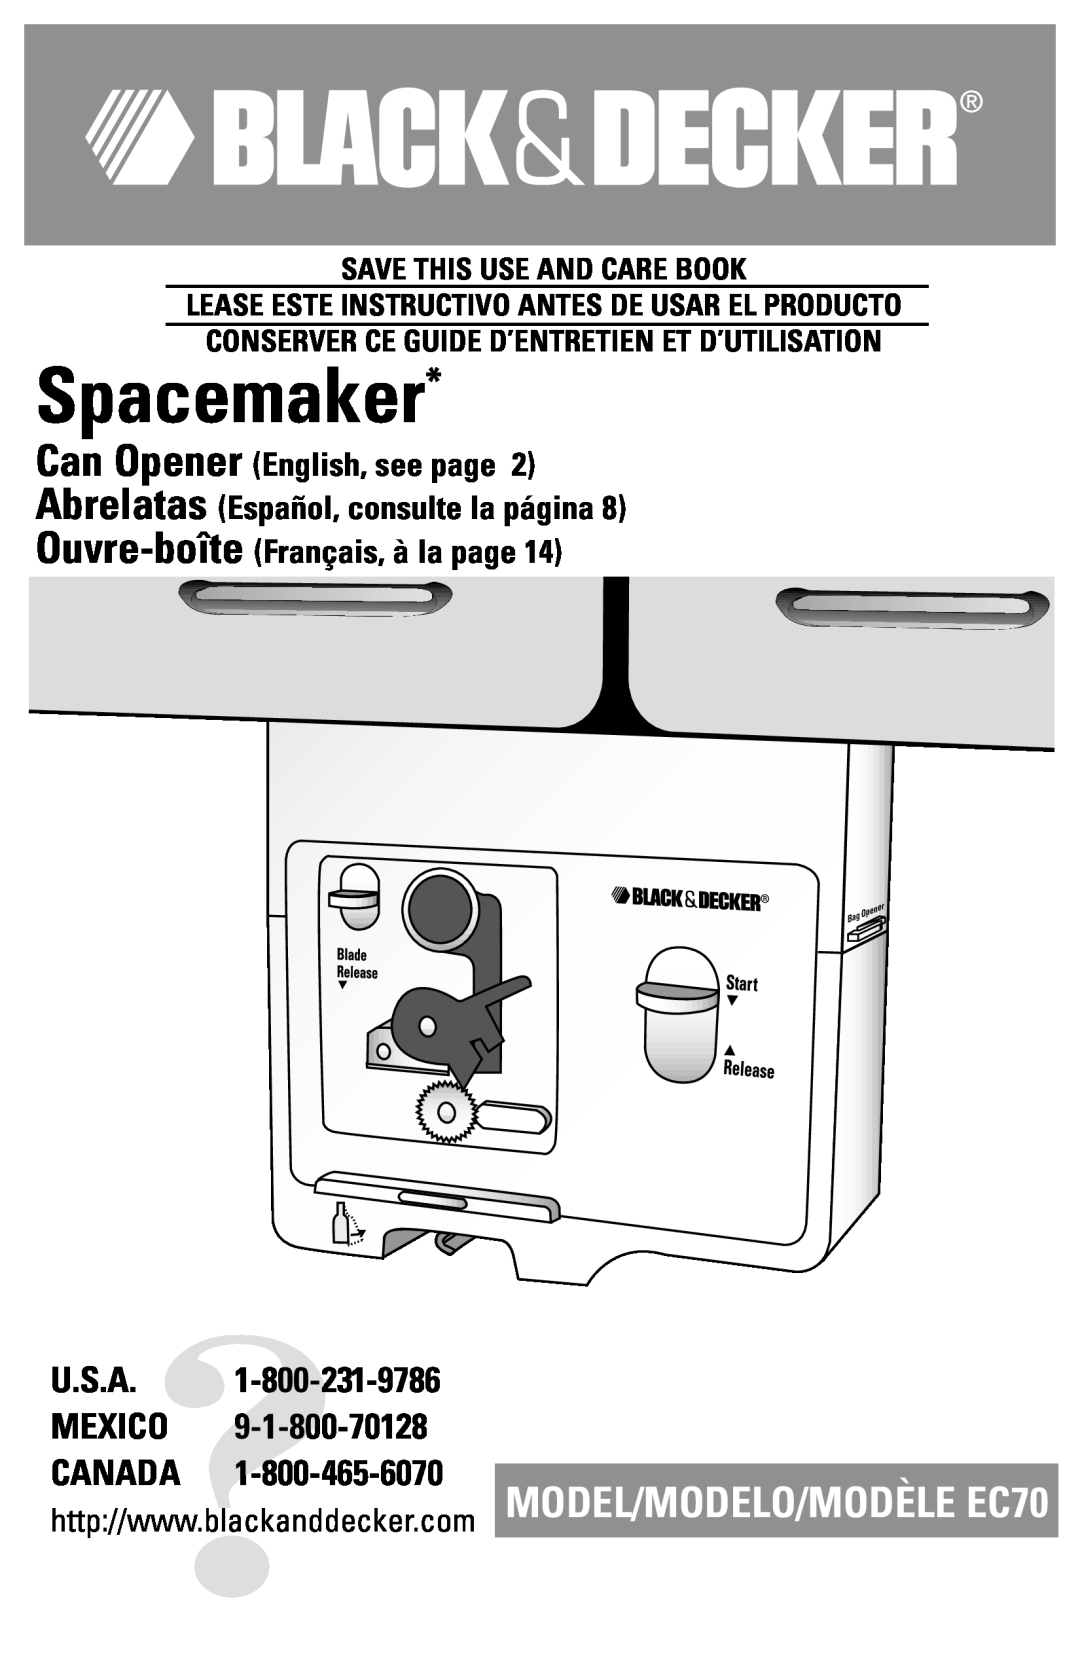 Black & Decker EC70 manual Save This Use And Care Book, Lease Este Instructivo Antes De Usar El Producto, Spacemaker 